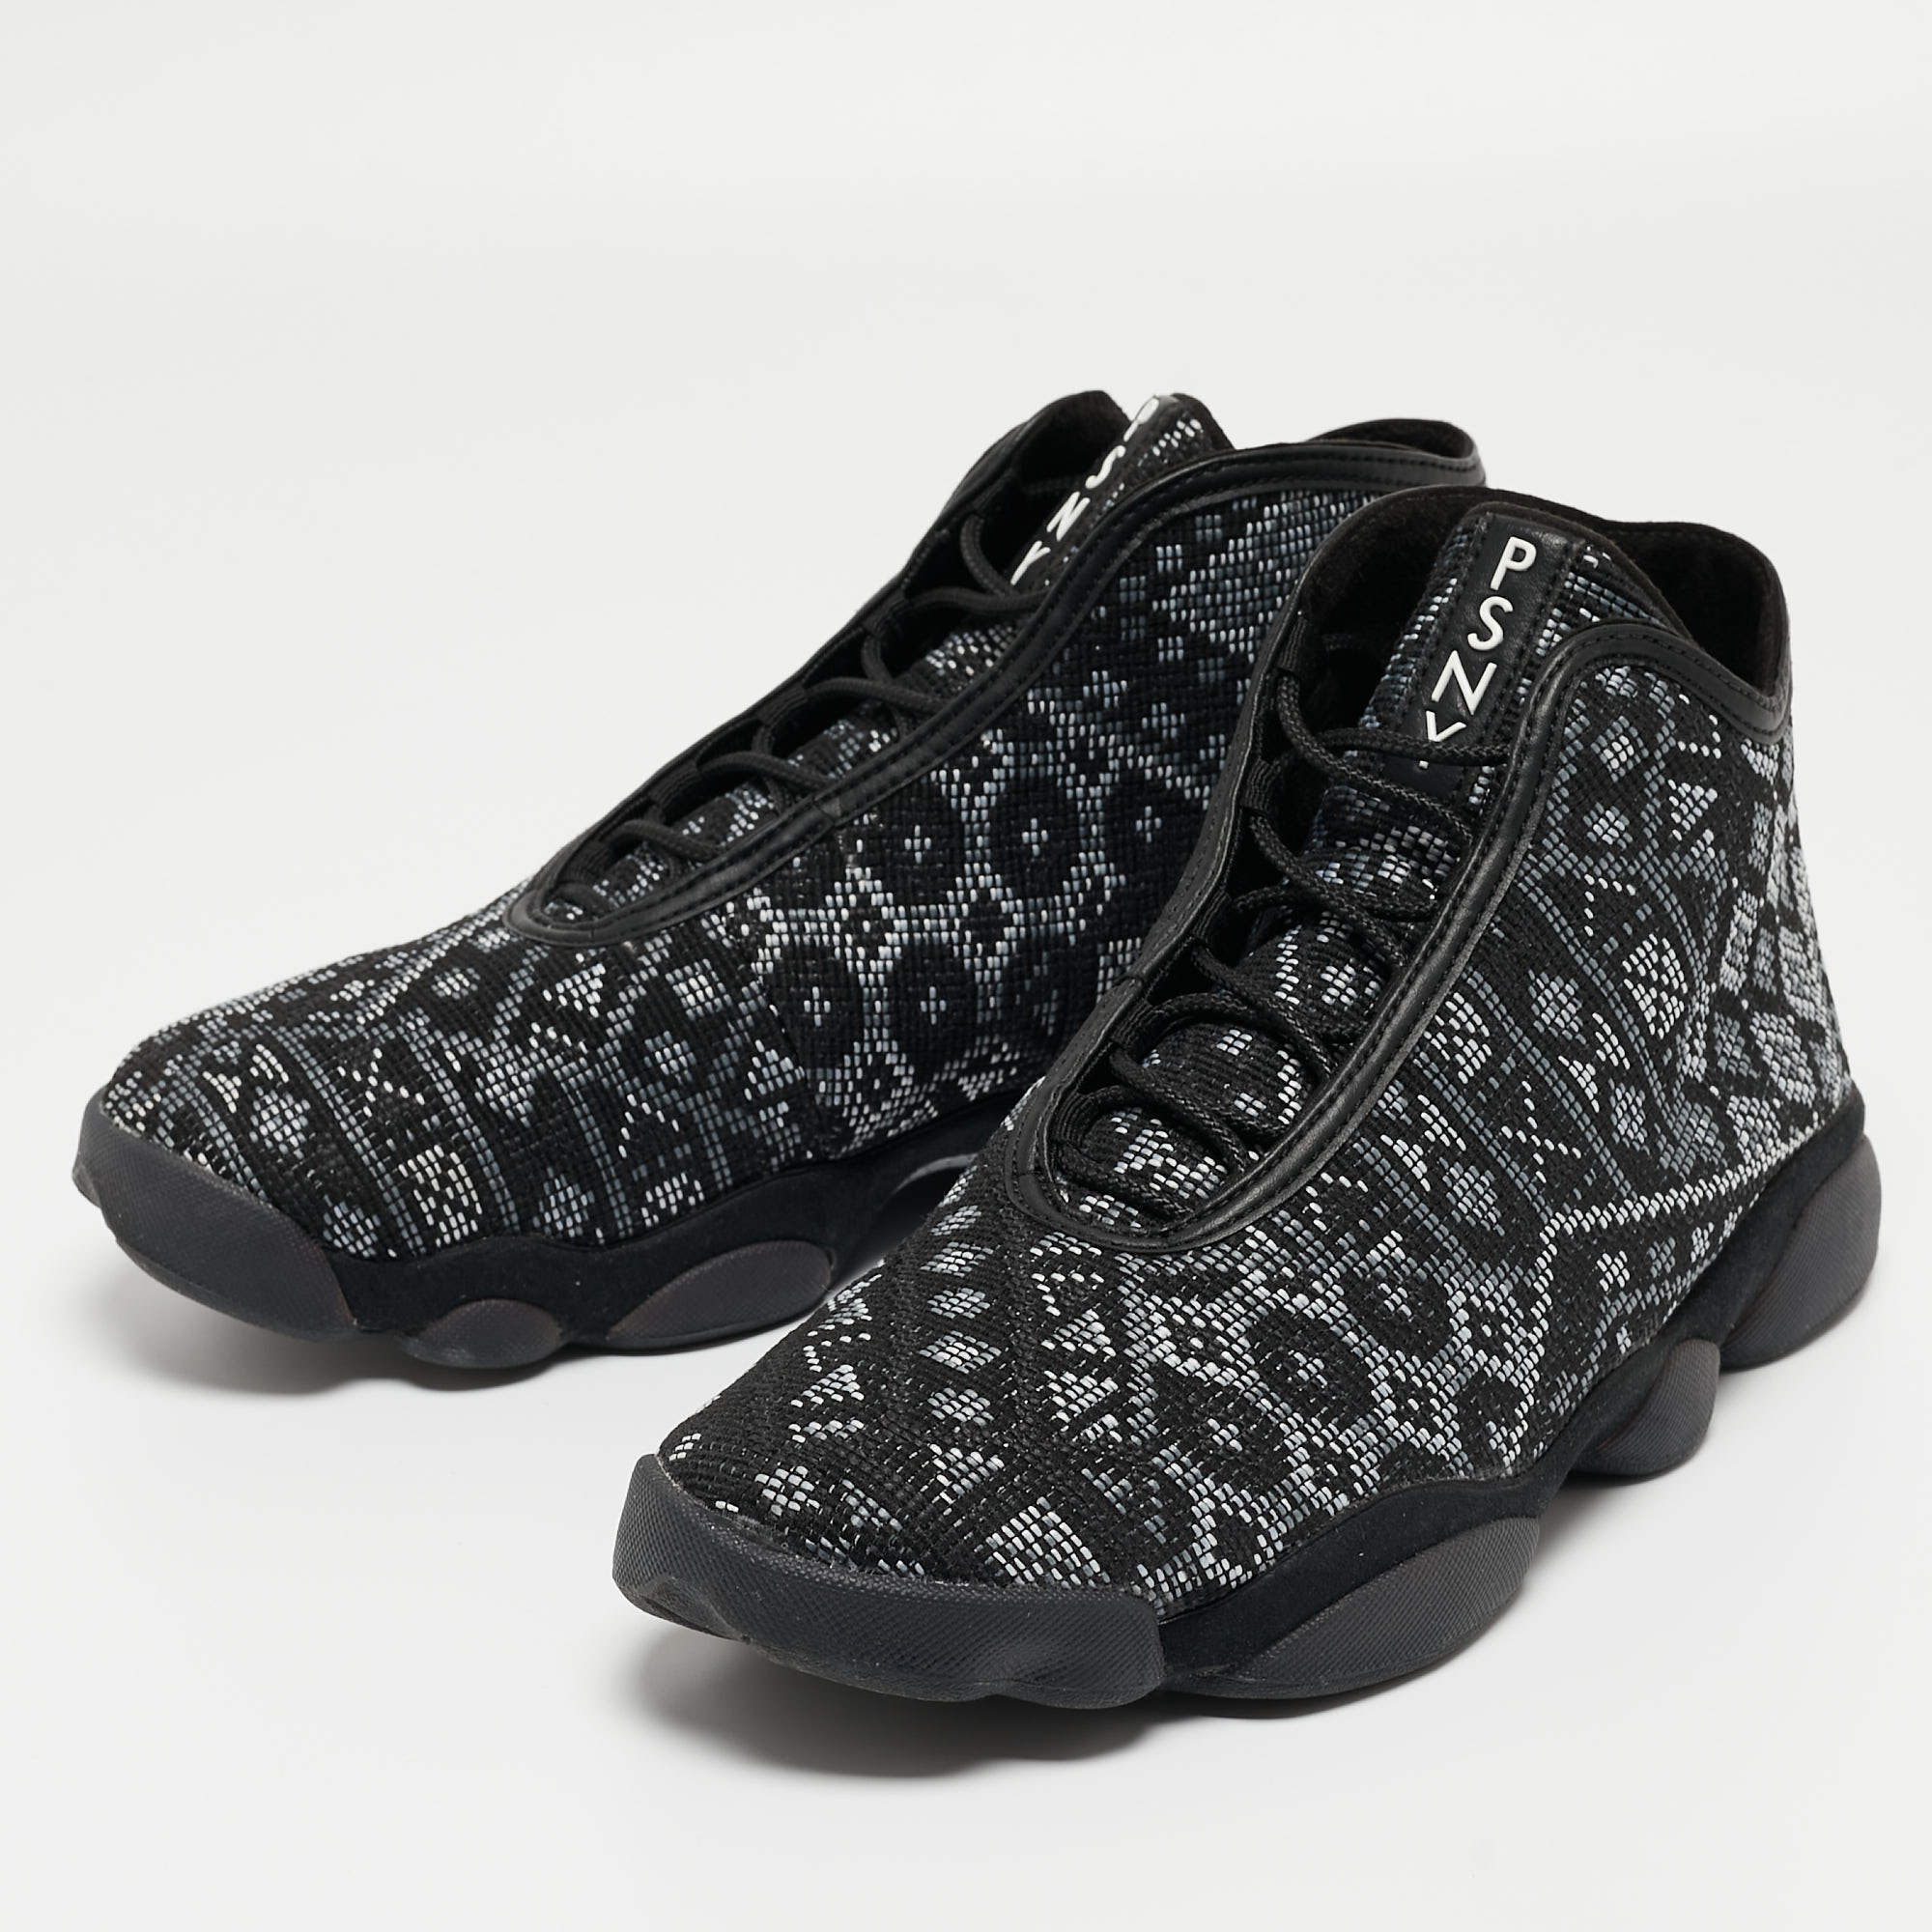 

Air Jordan Black Canvas Horison Premuim Psny Sneakers Size